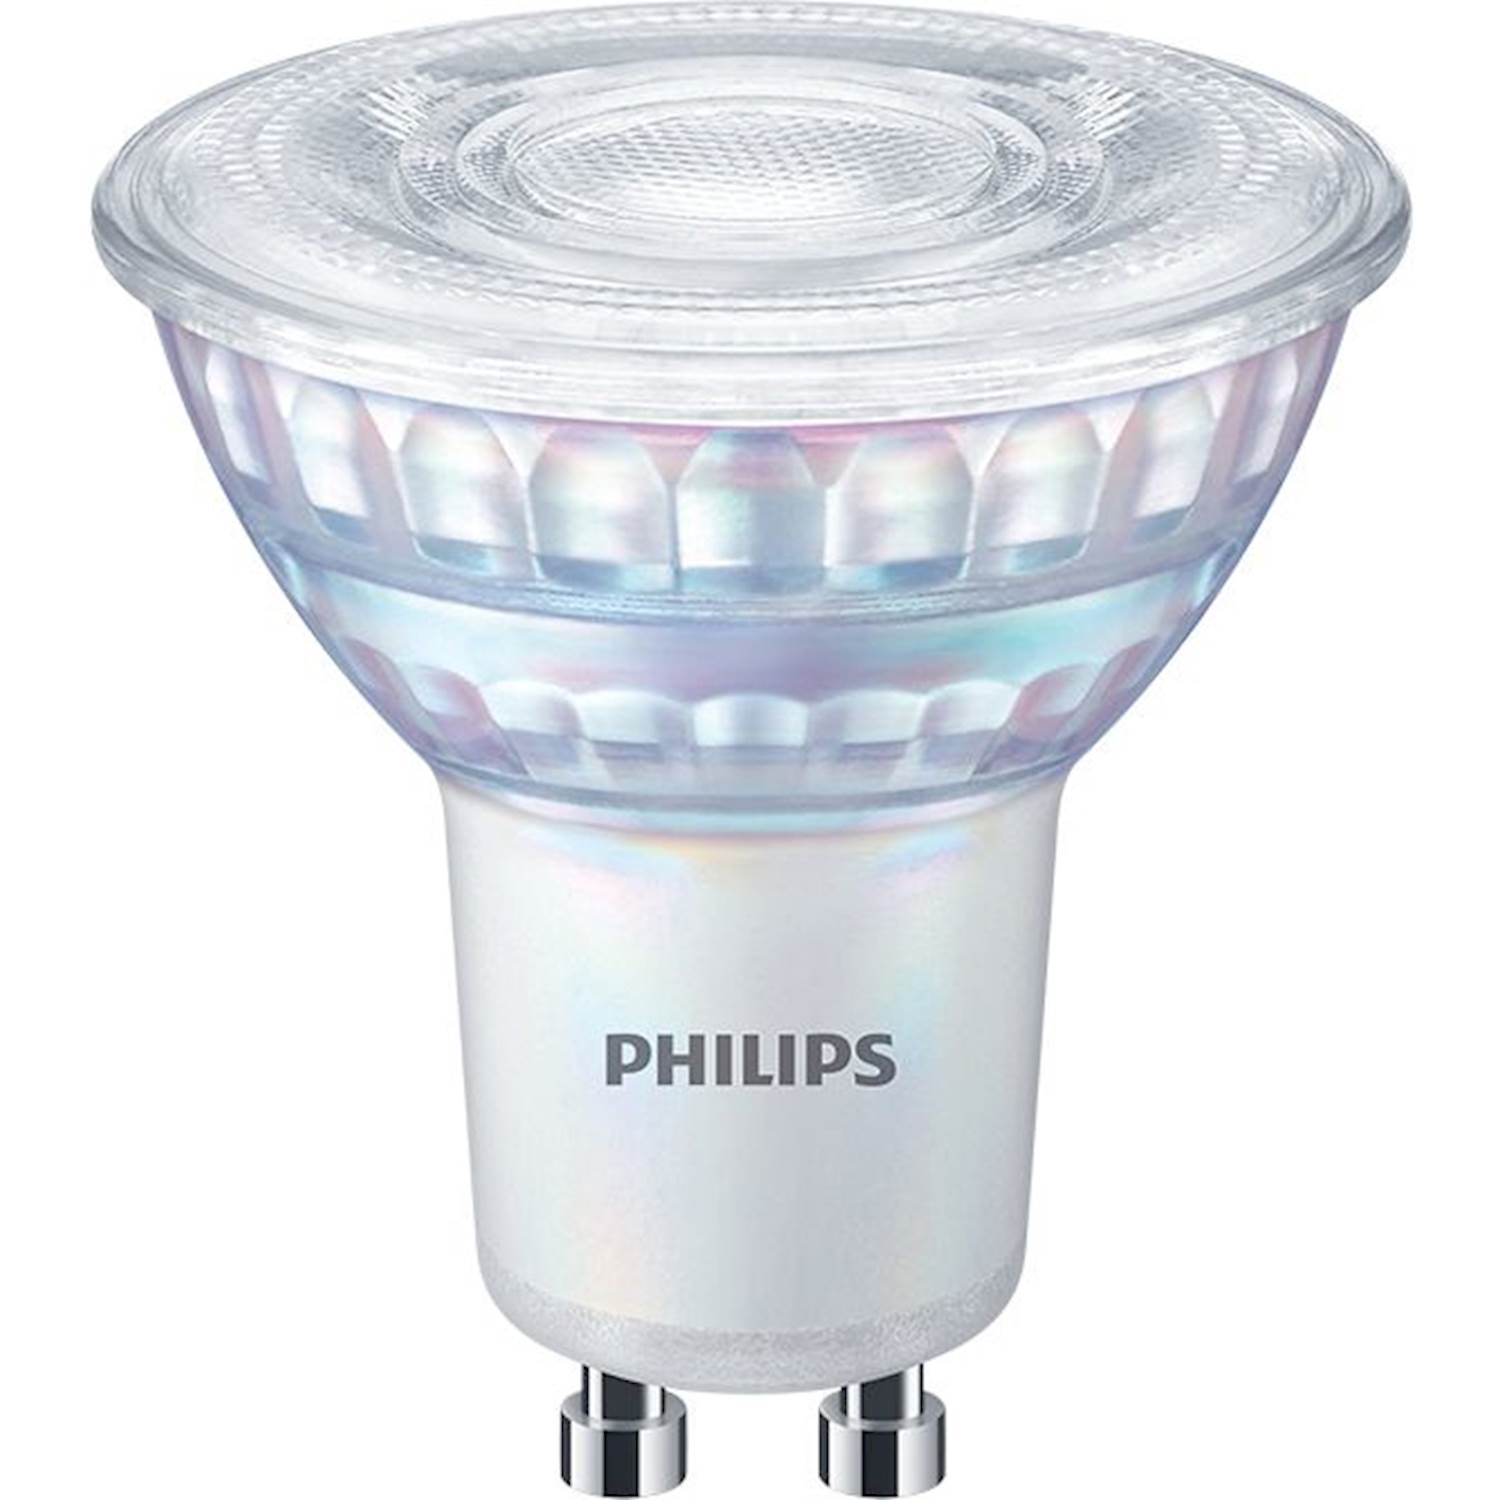 Philips LED 50w spot